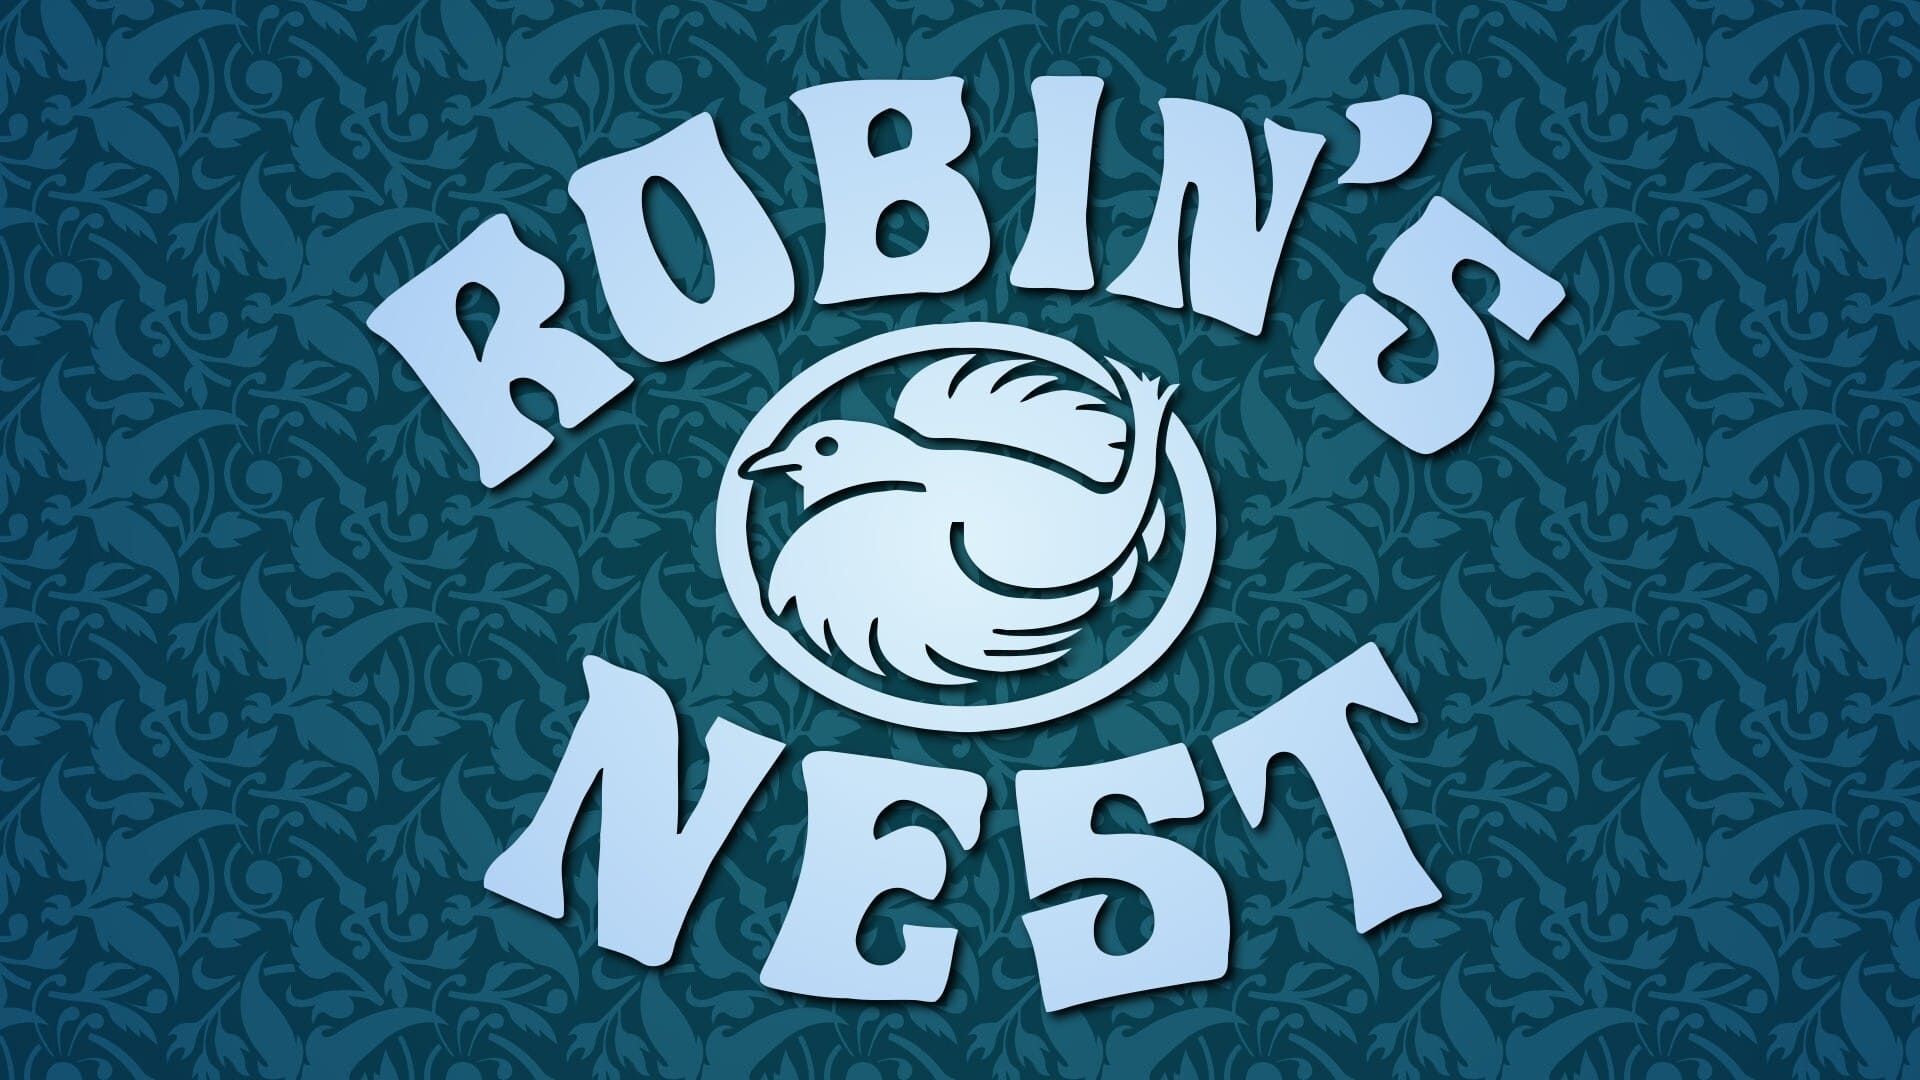 Robin's Nest background